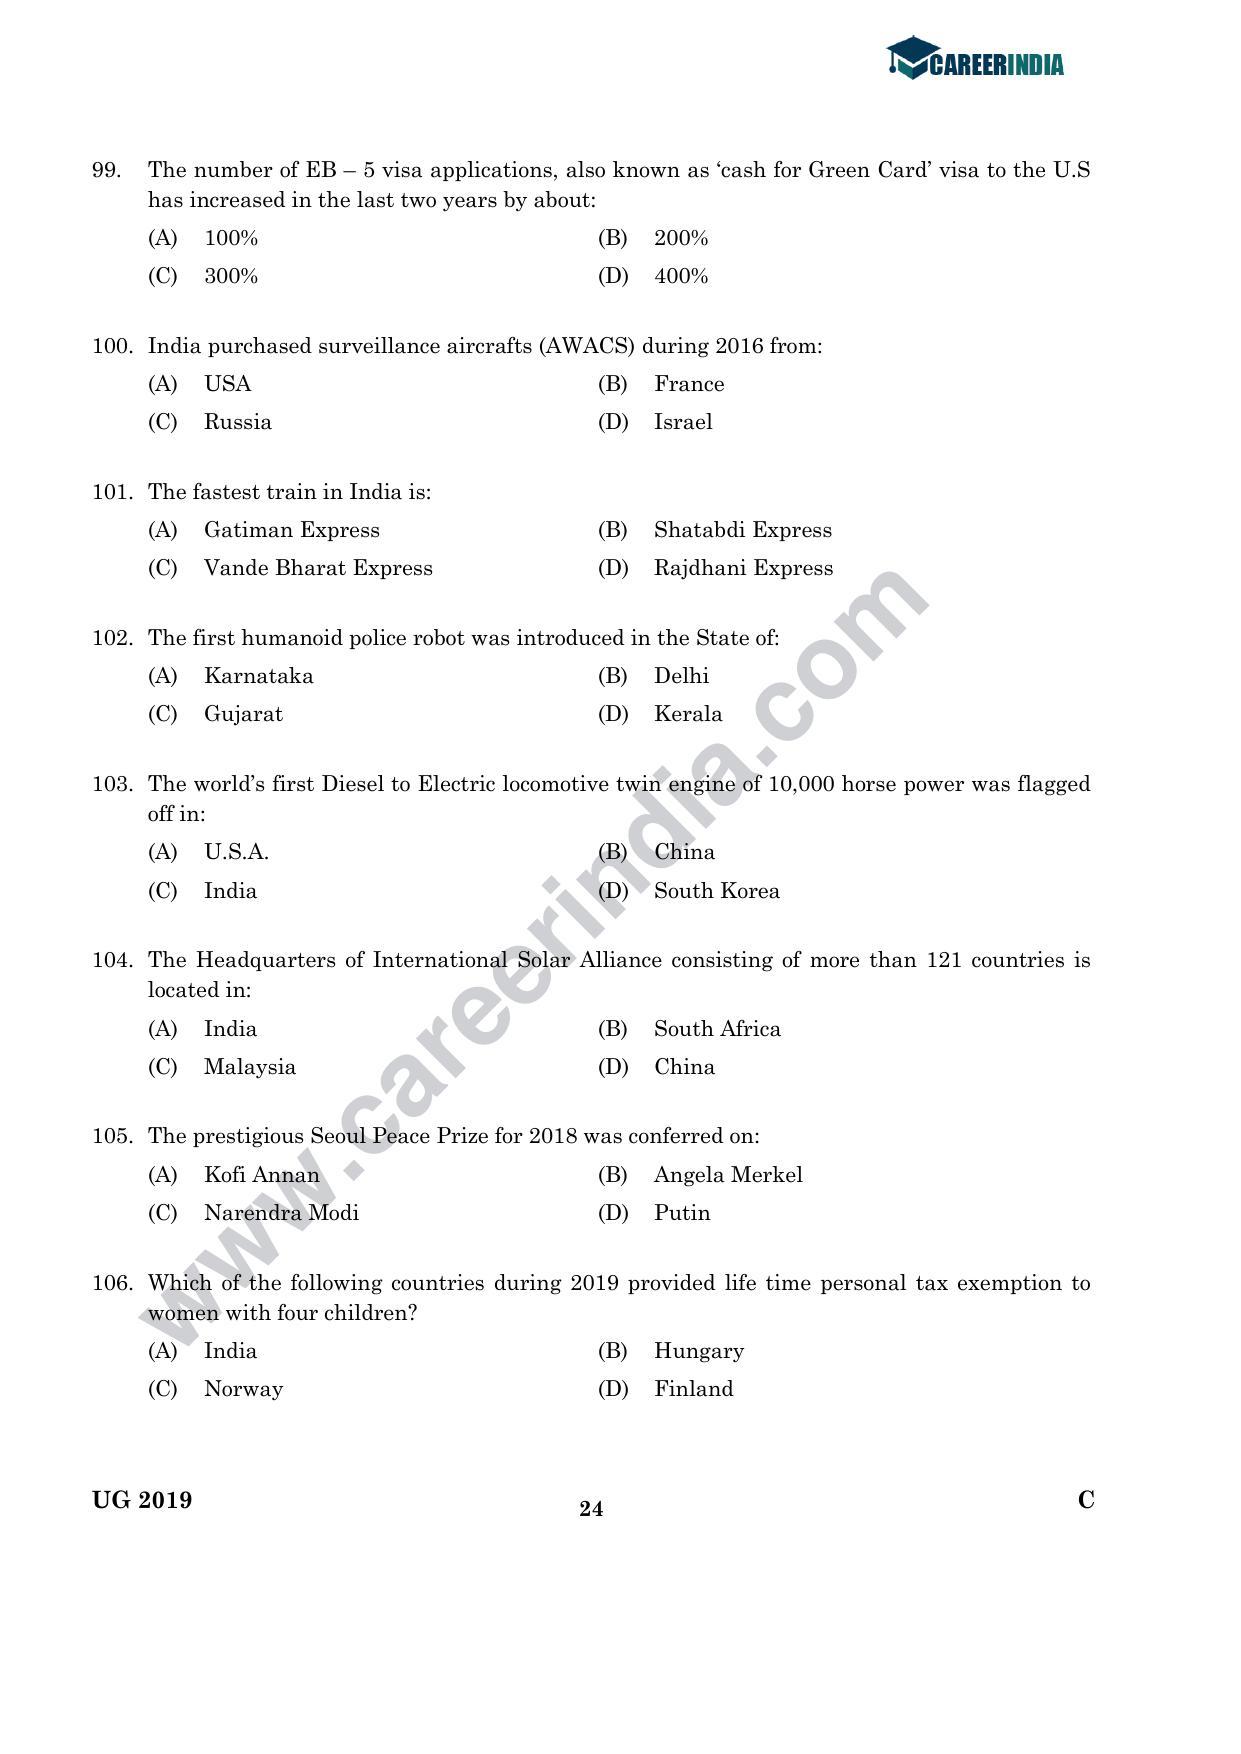 CLAT 2019 UG Legal-Aptitude Question Paper - Page 23